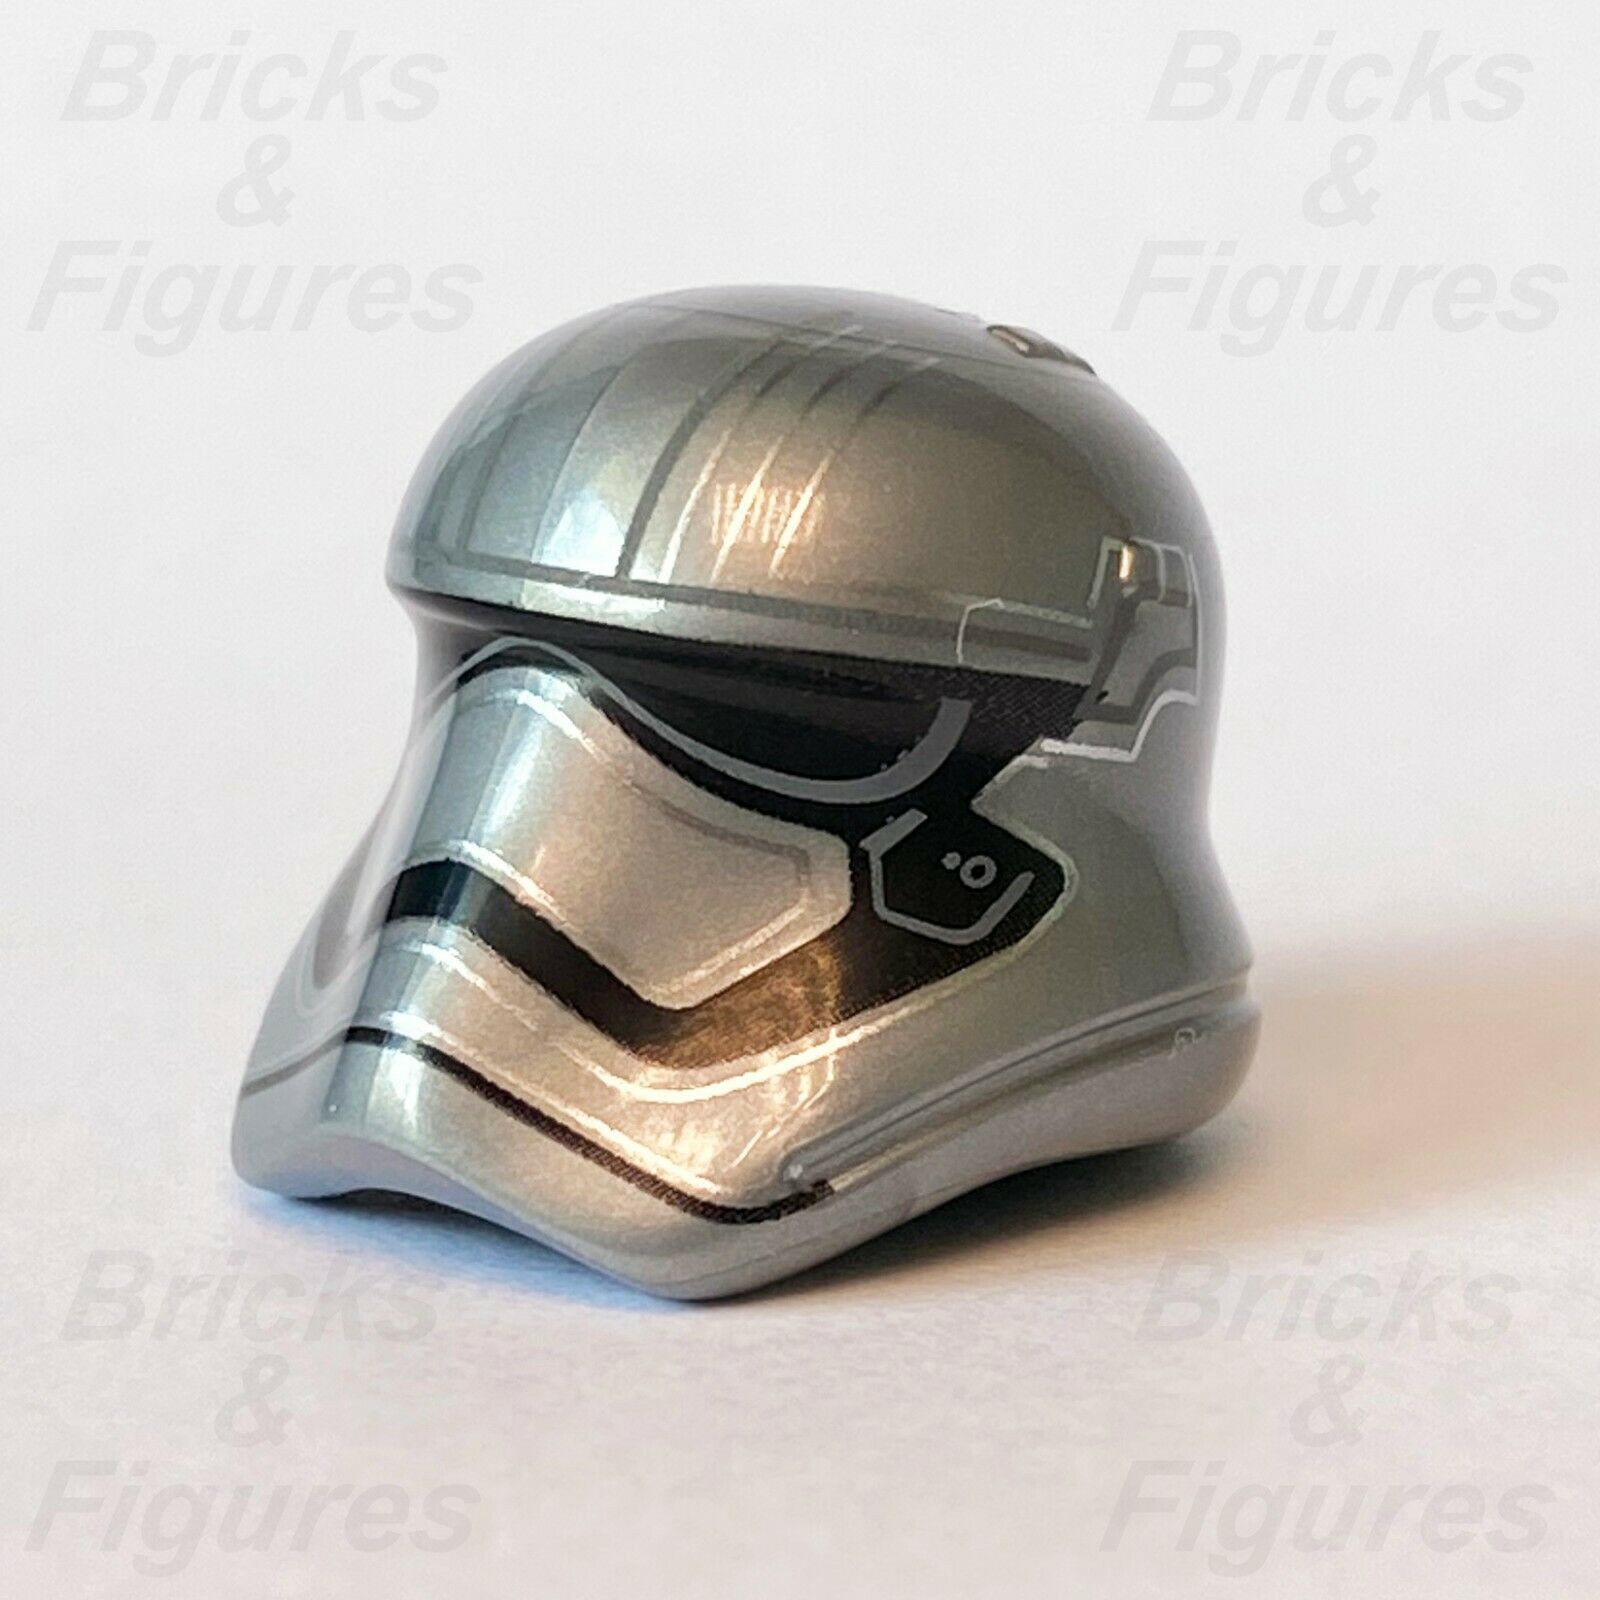 Star Wars LEGO Captain Phasma's First Order Helmet Stormtrooper Part 75103 - Bricks & Figures